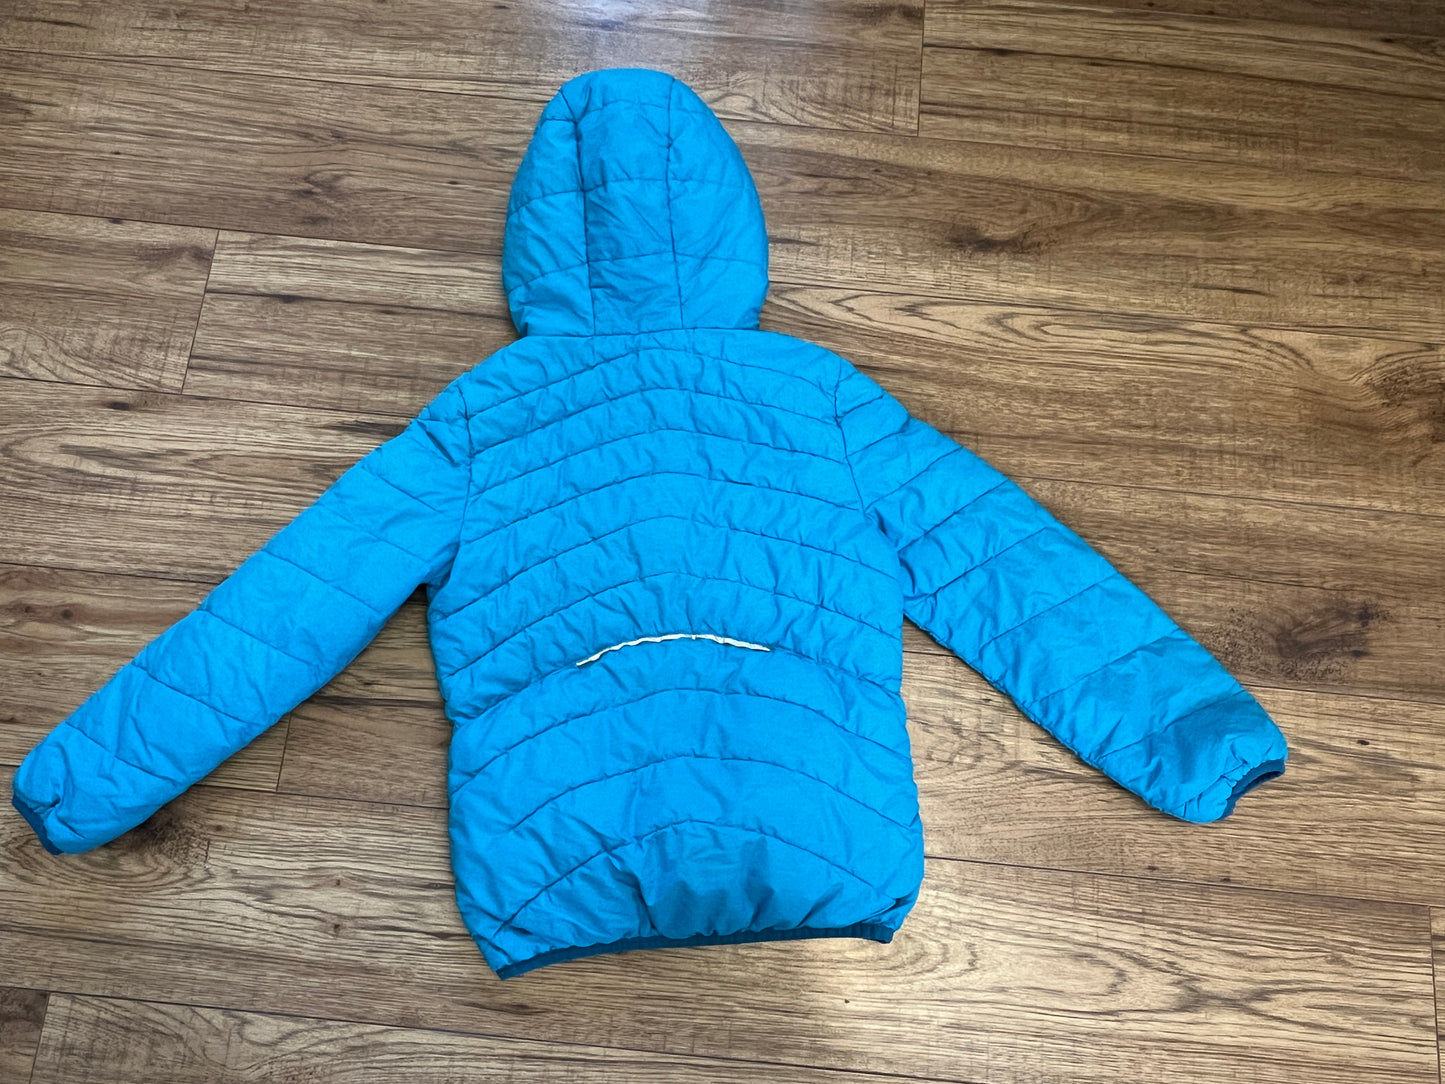 Coat Child Size 7-8 Paradox Puffer Coat Aqua Blue